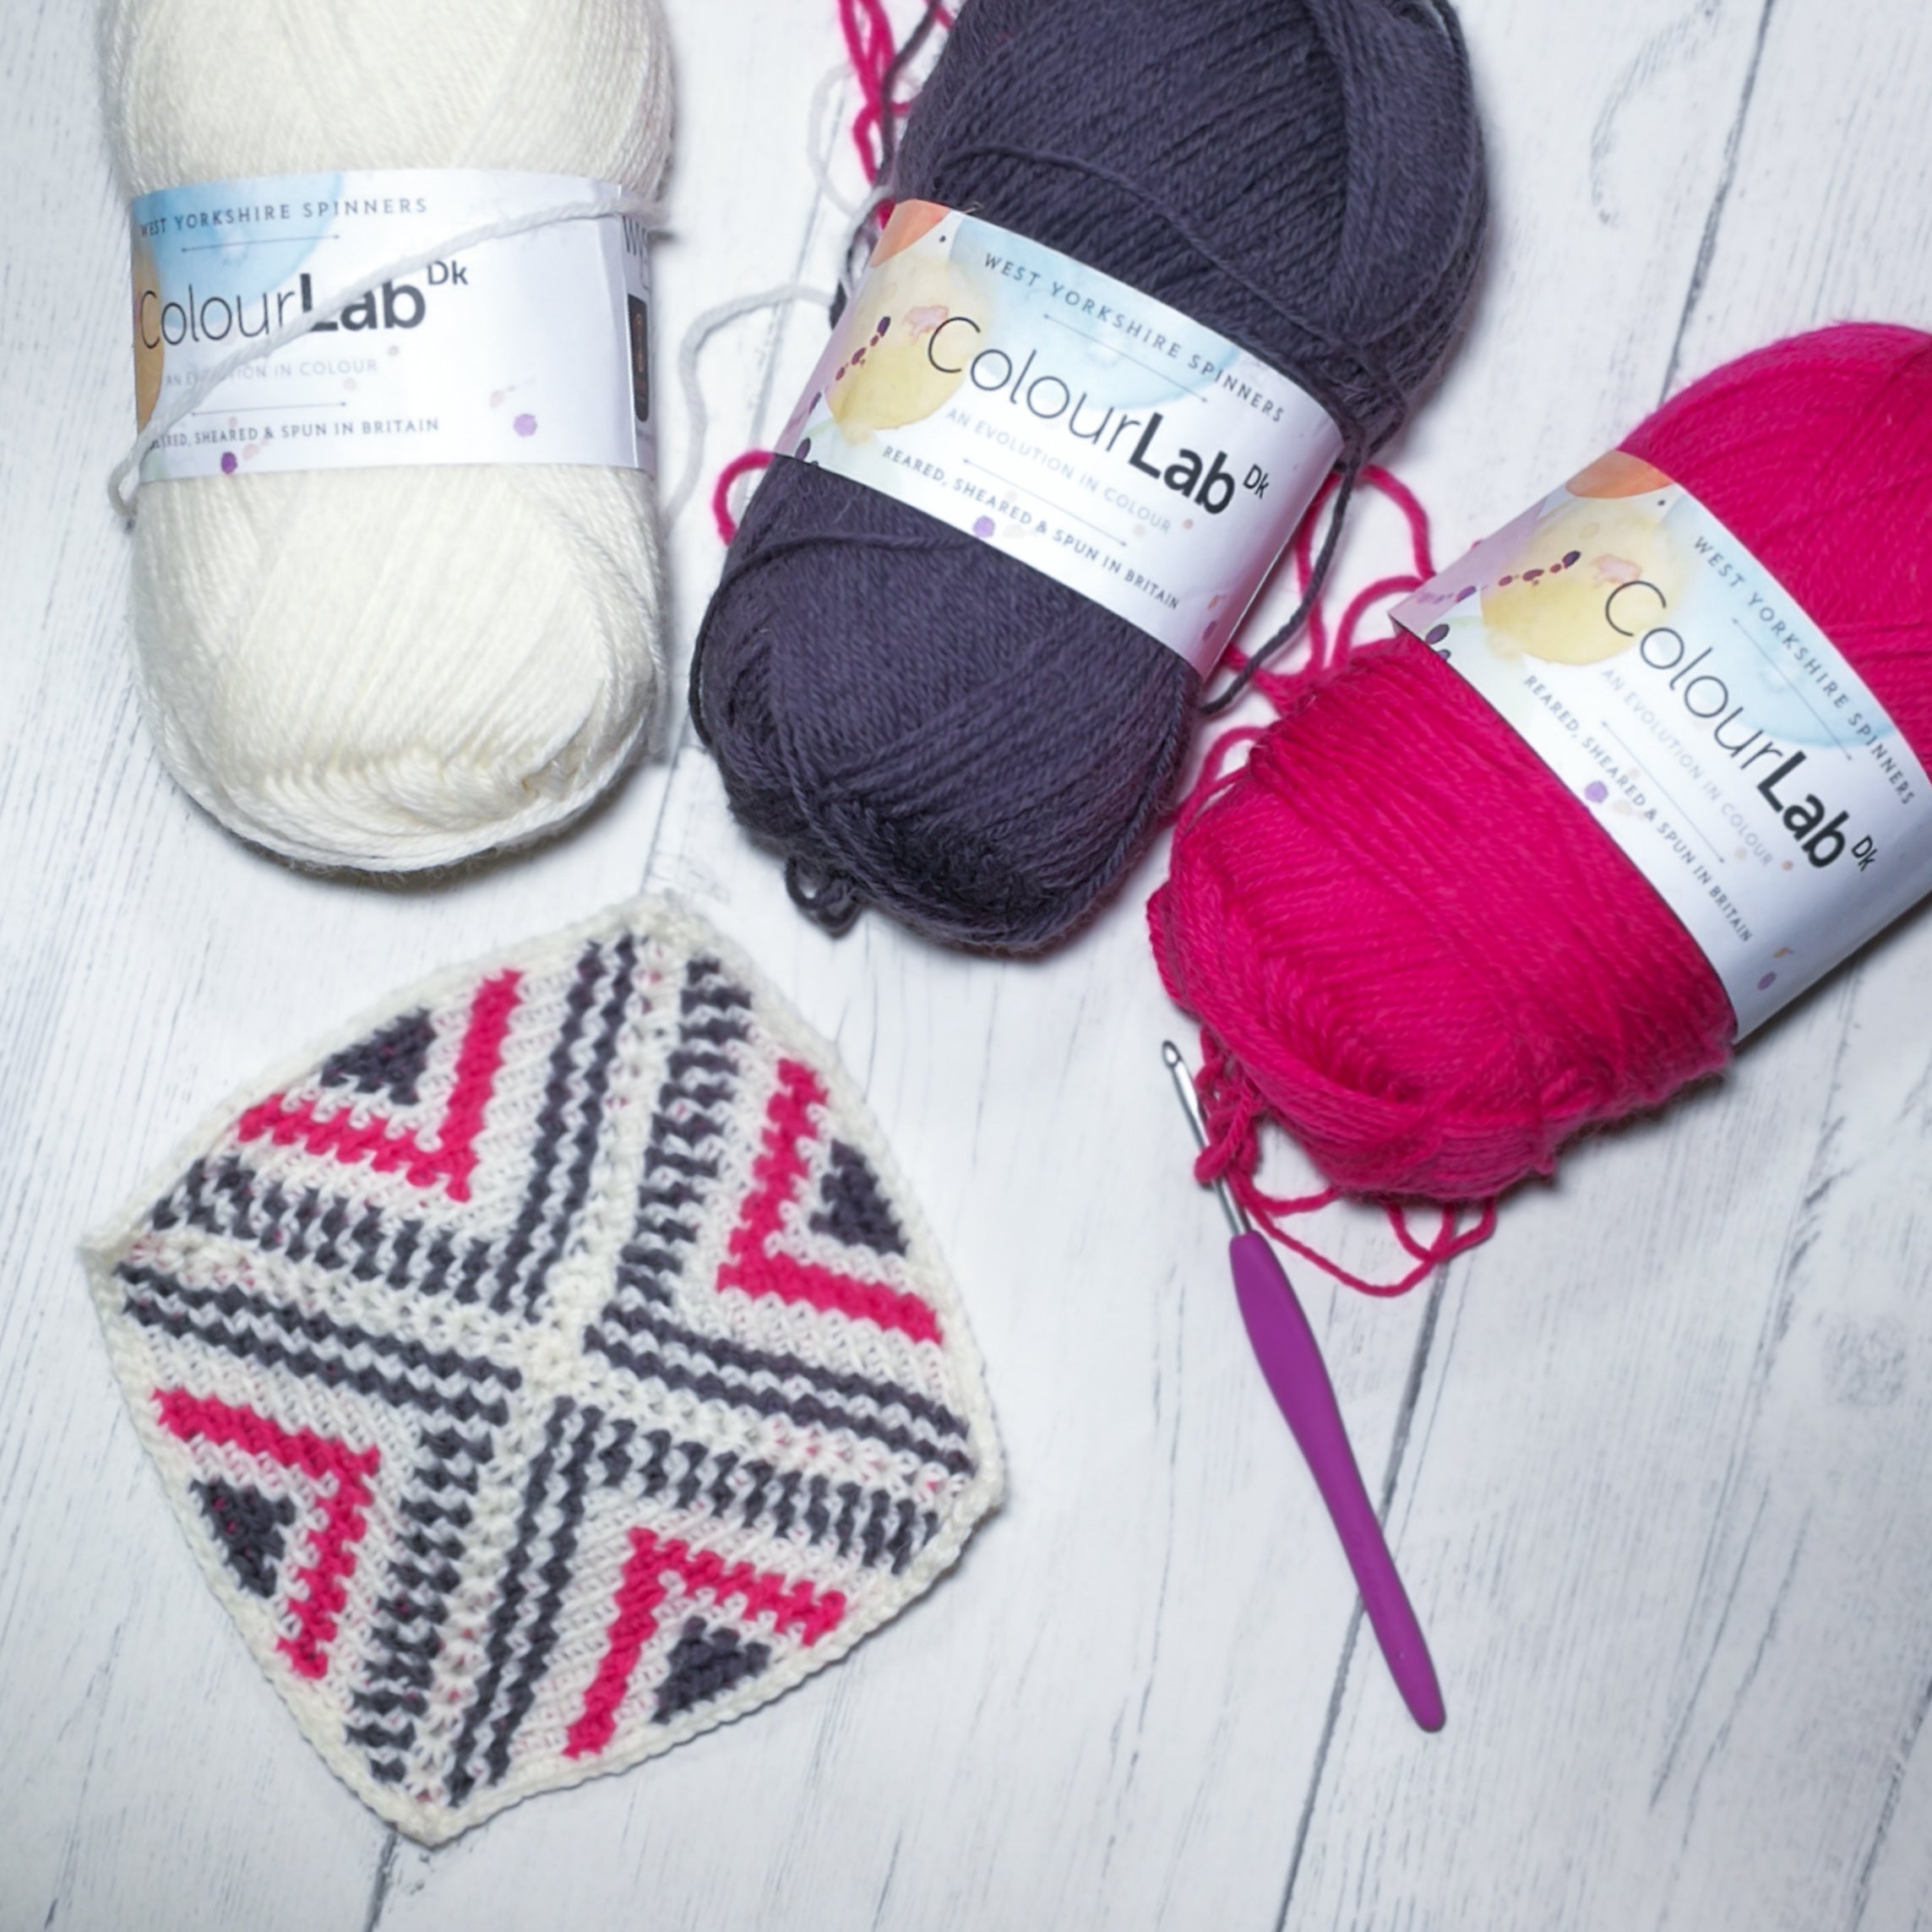 WYS ColourLab Cushion CAL yarn pack